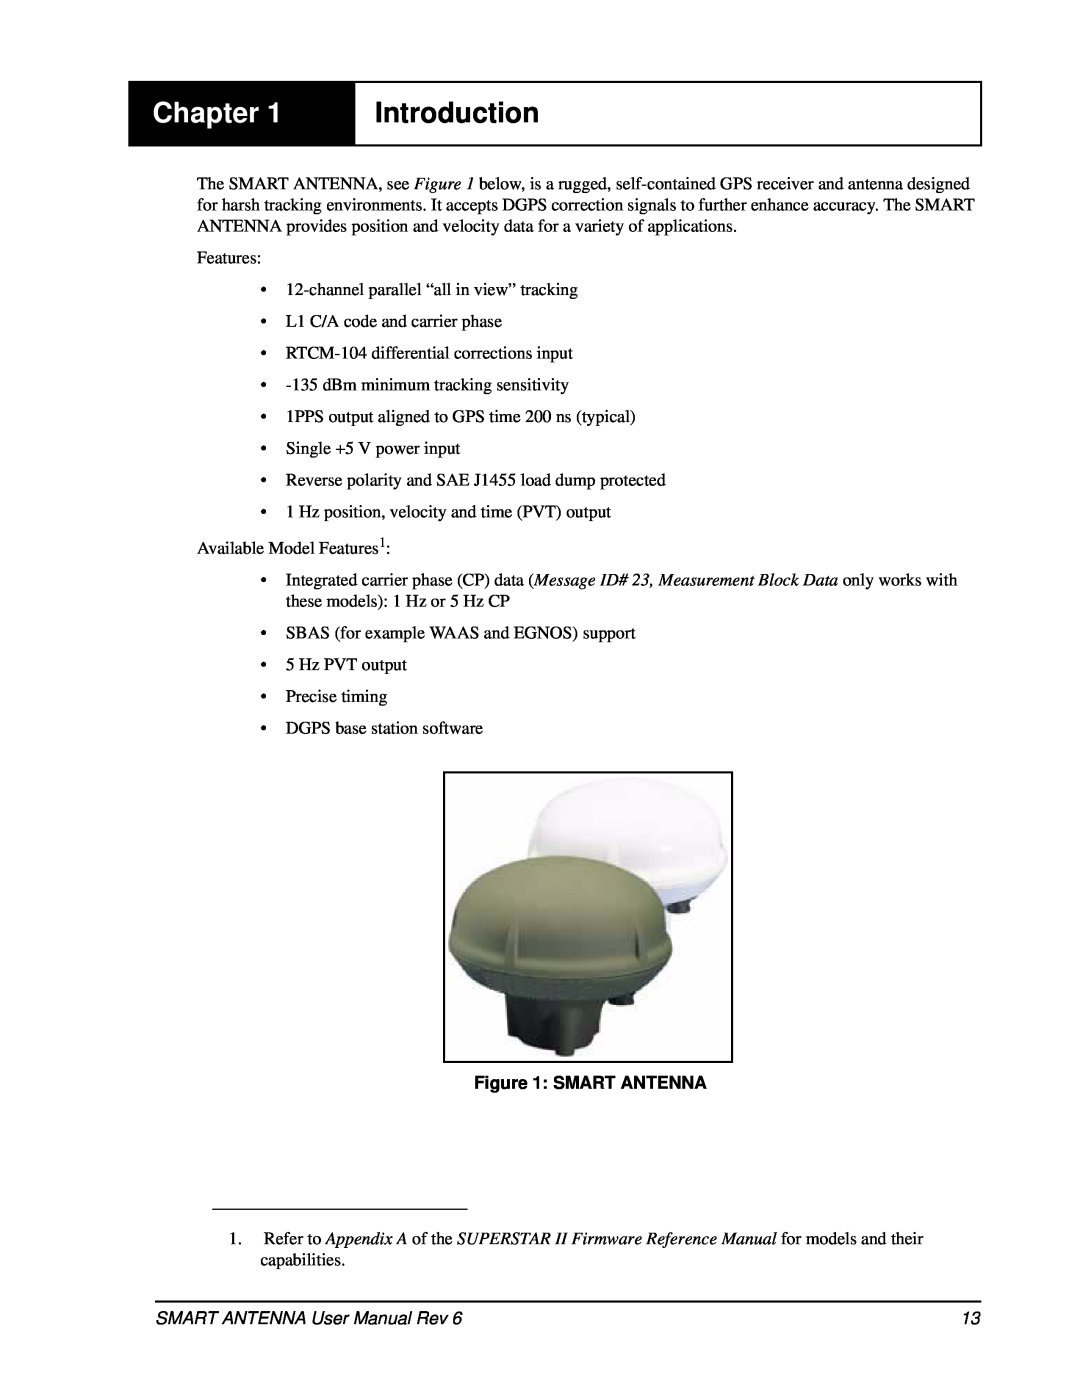 Novatel SMART ANTENNA user manual Chapter, Introduction, Smart Antenna 